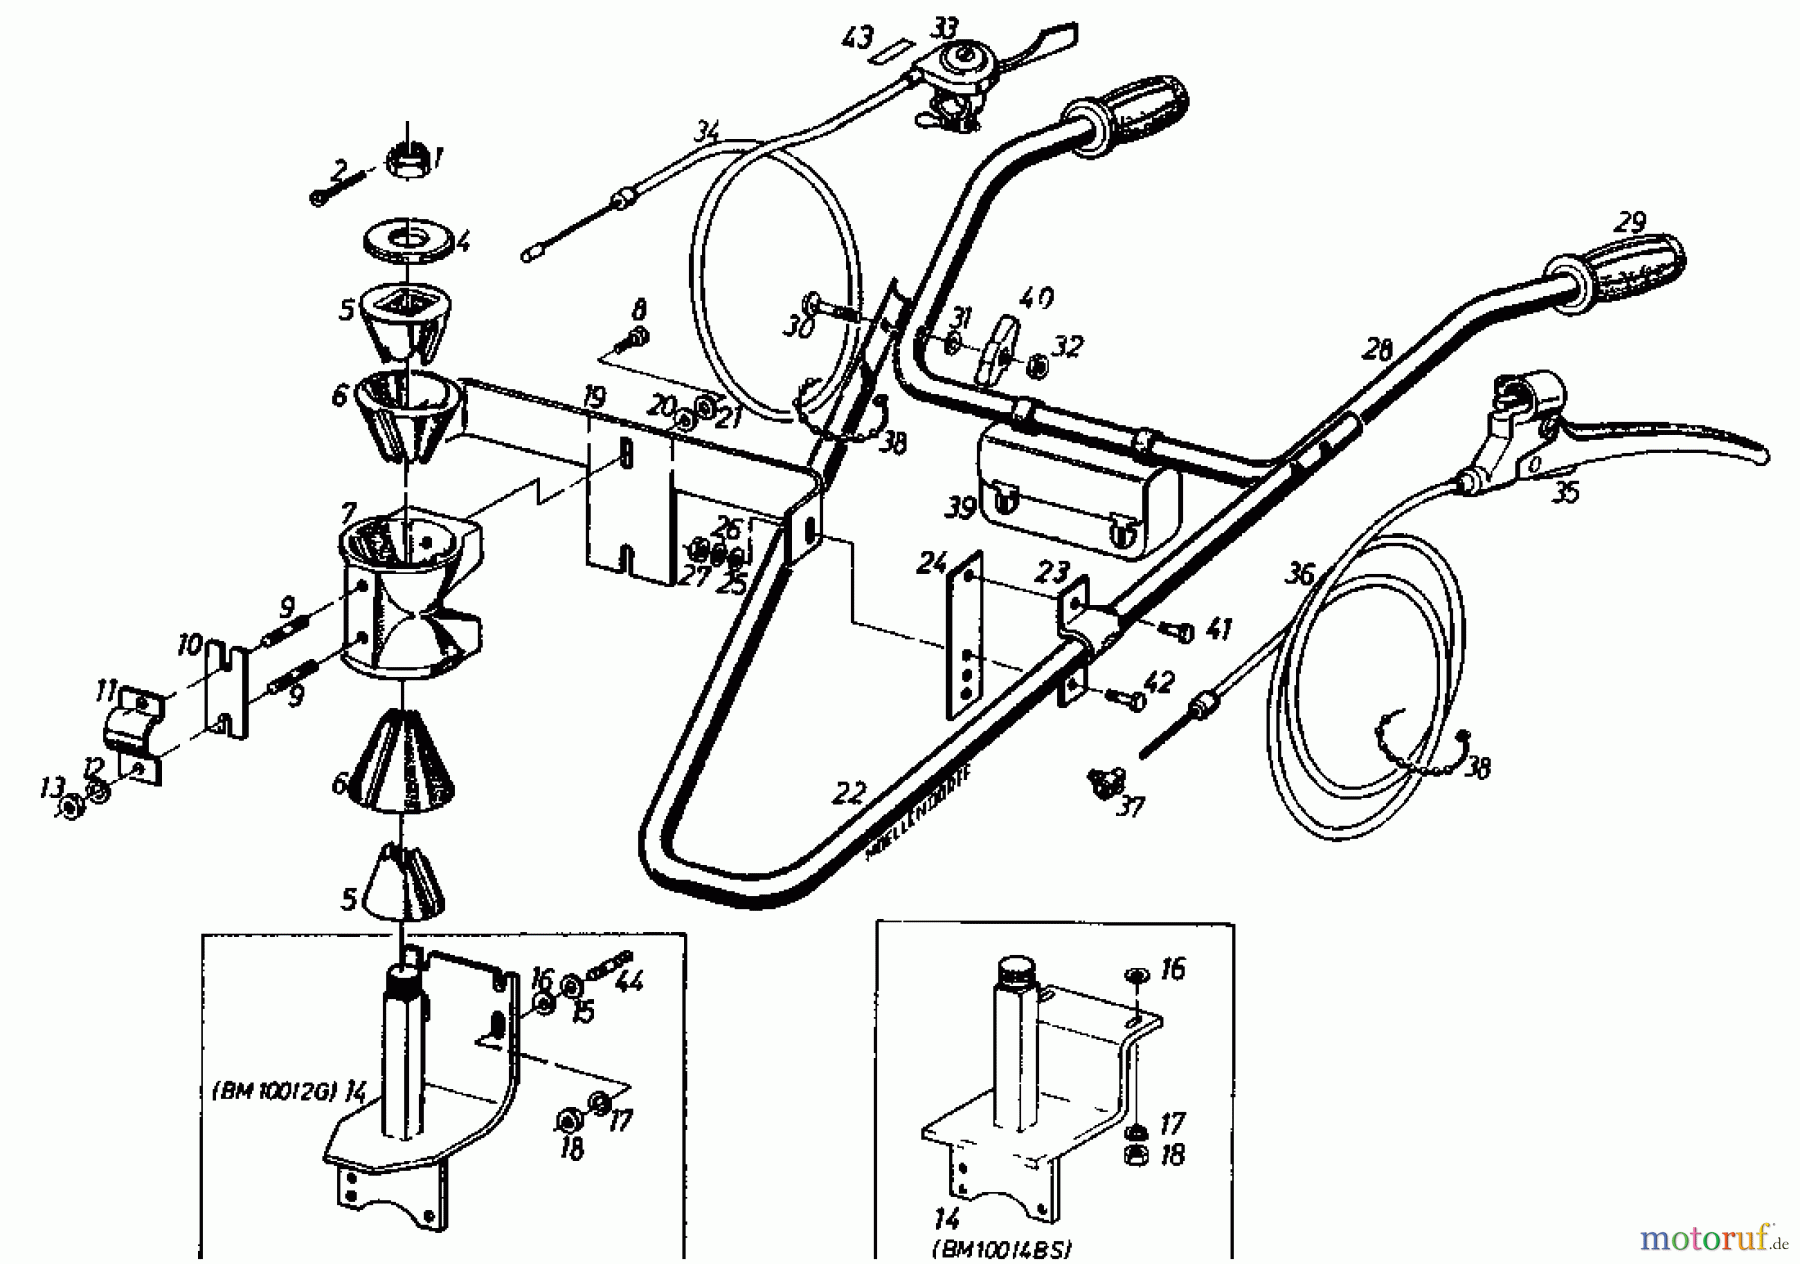  Gutbrod Cutter bar mower BM 100-2/G 07507.02  (1985) Handle